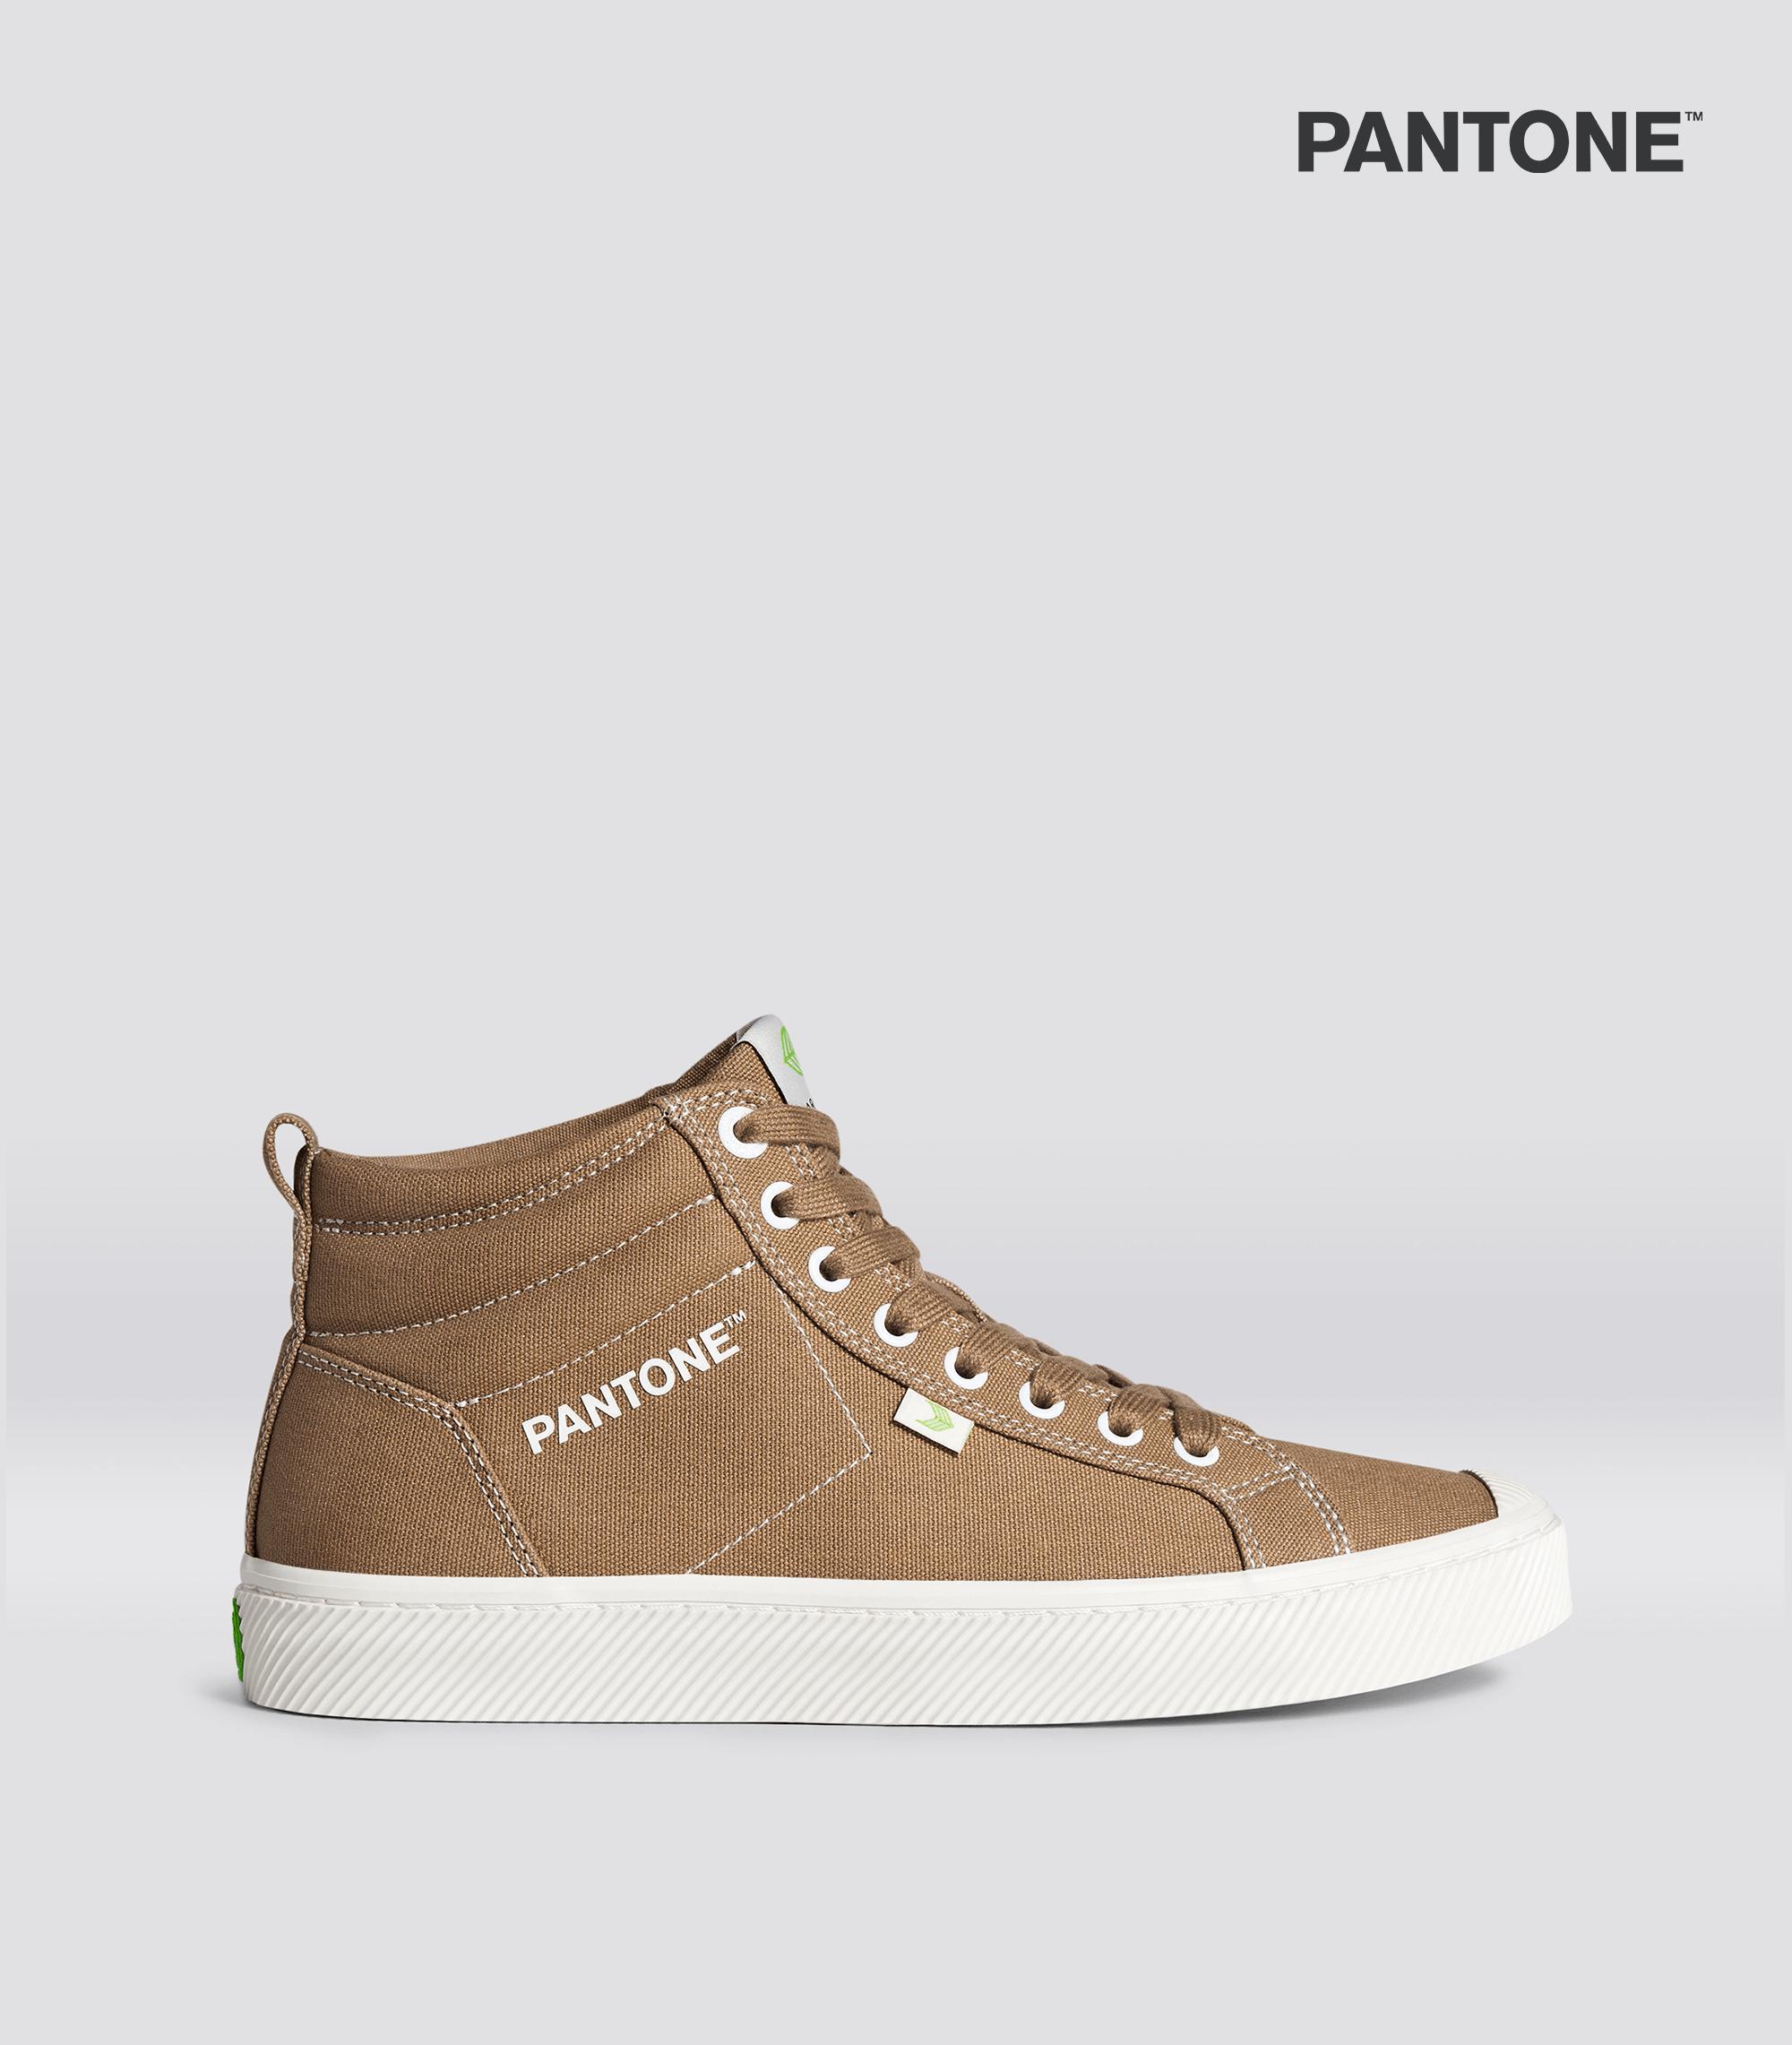 Cariuma OCA High Pantone Lion Canvas Contrast Thread Sneaker Product Image